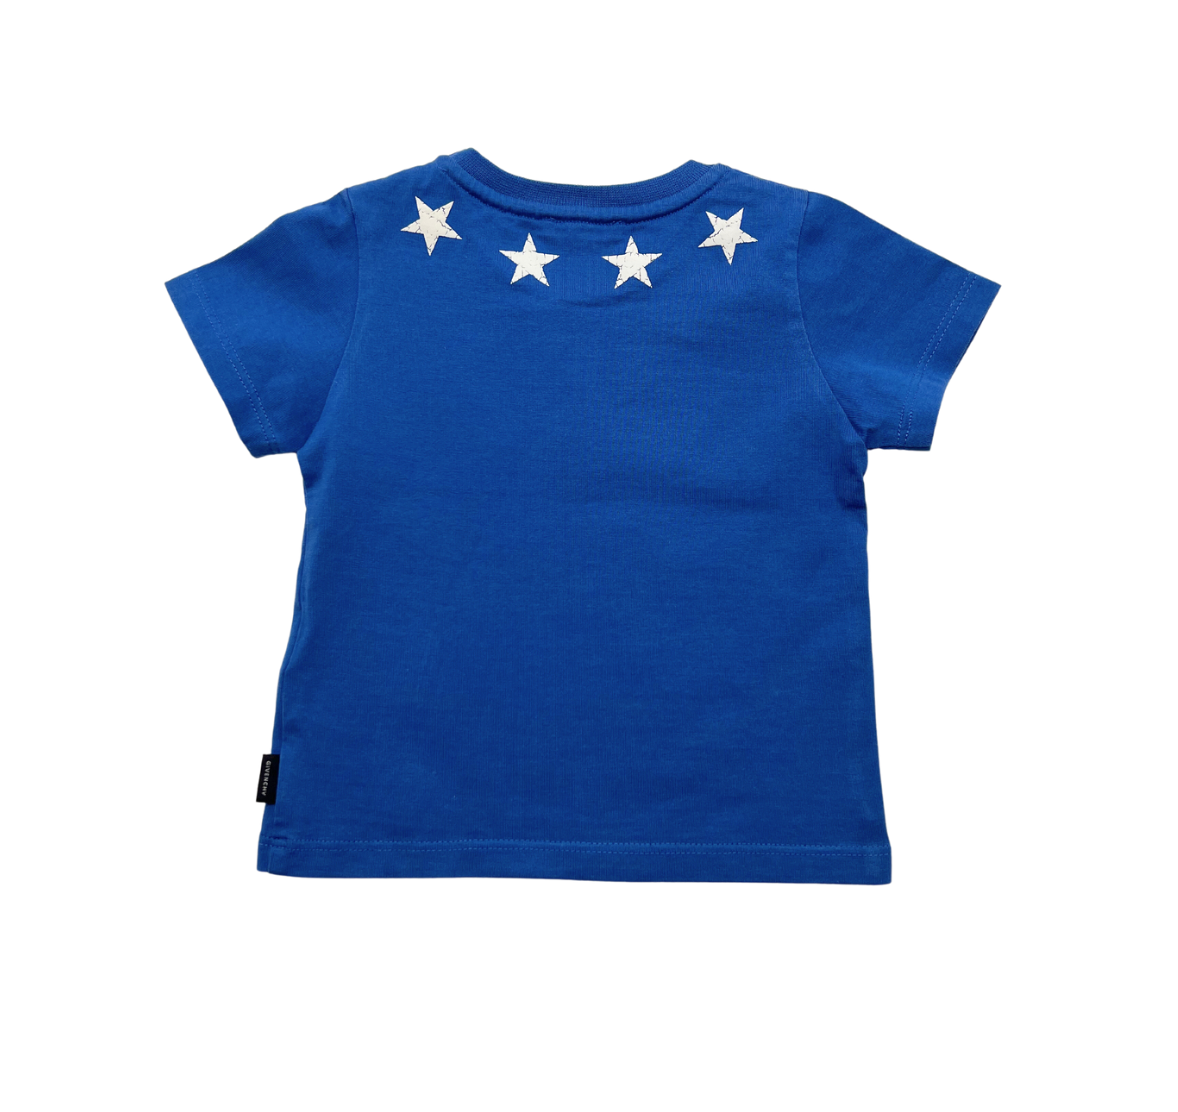 GIVENCHY - T-shirt à étoiles bleu - 6 mois